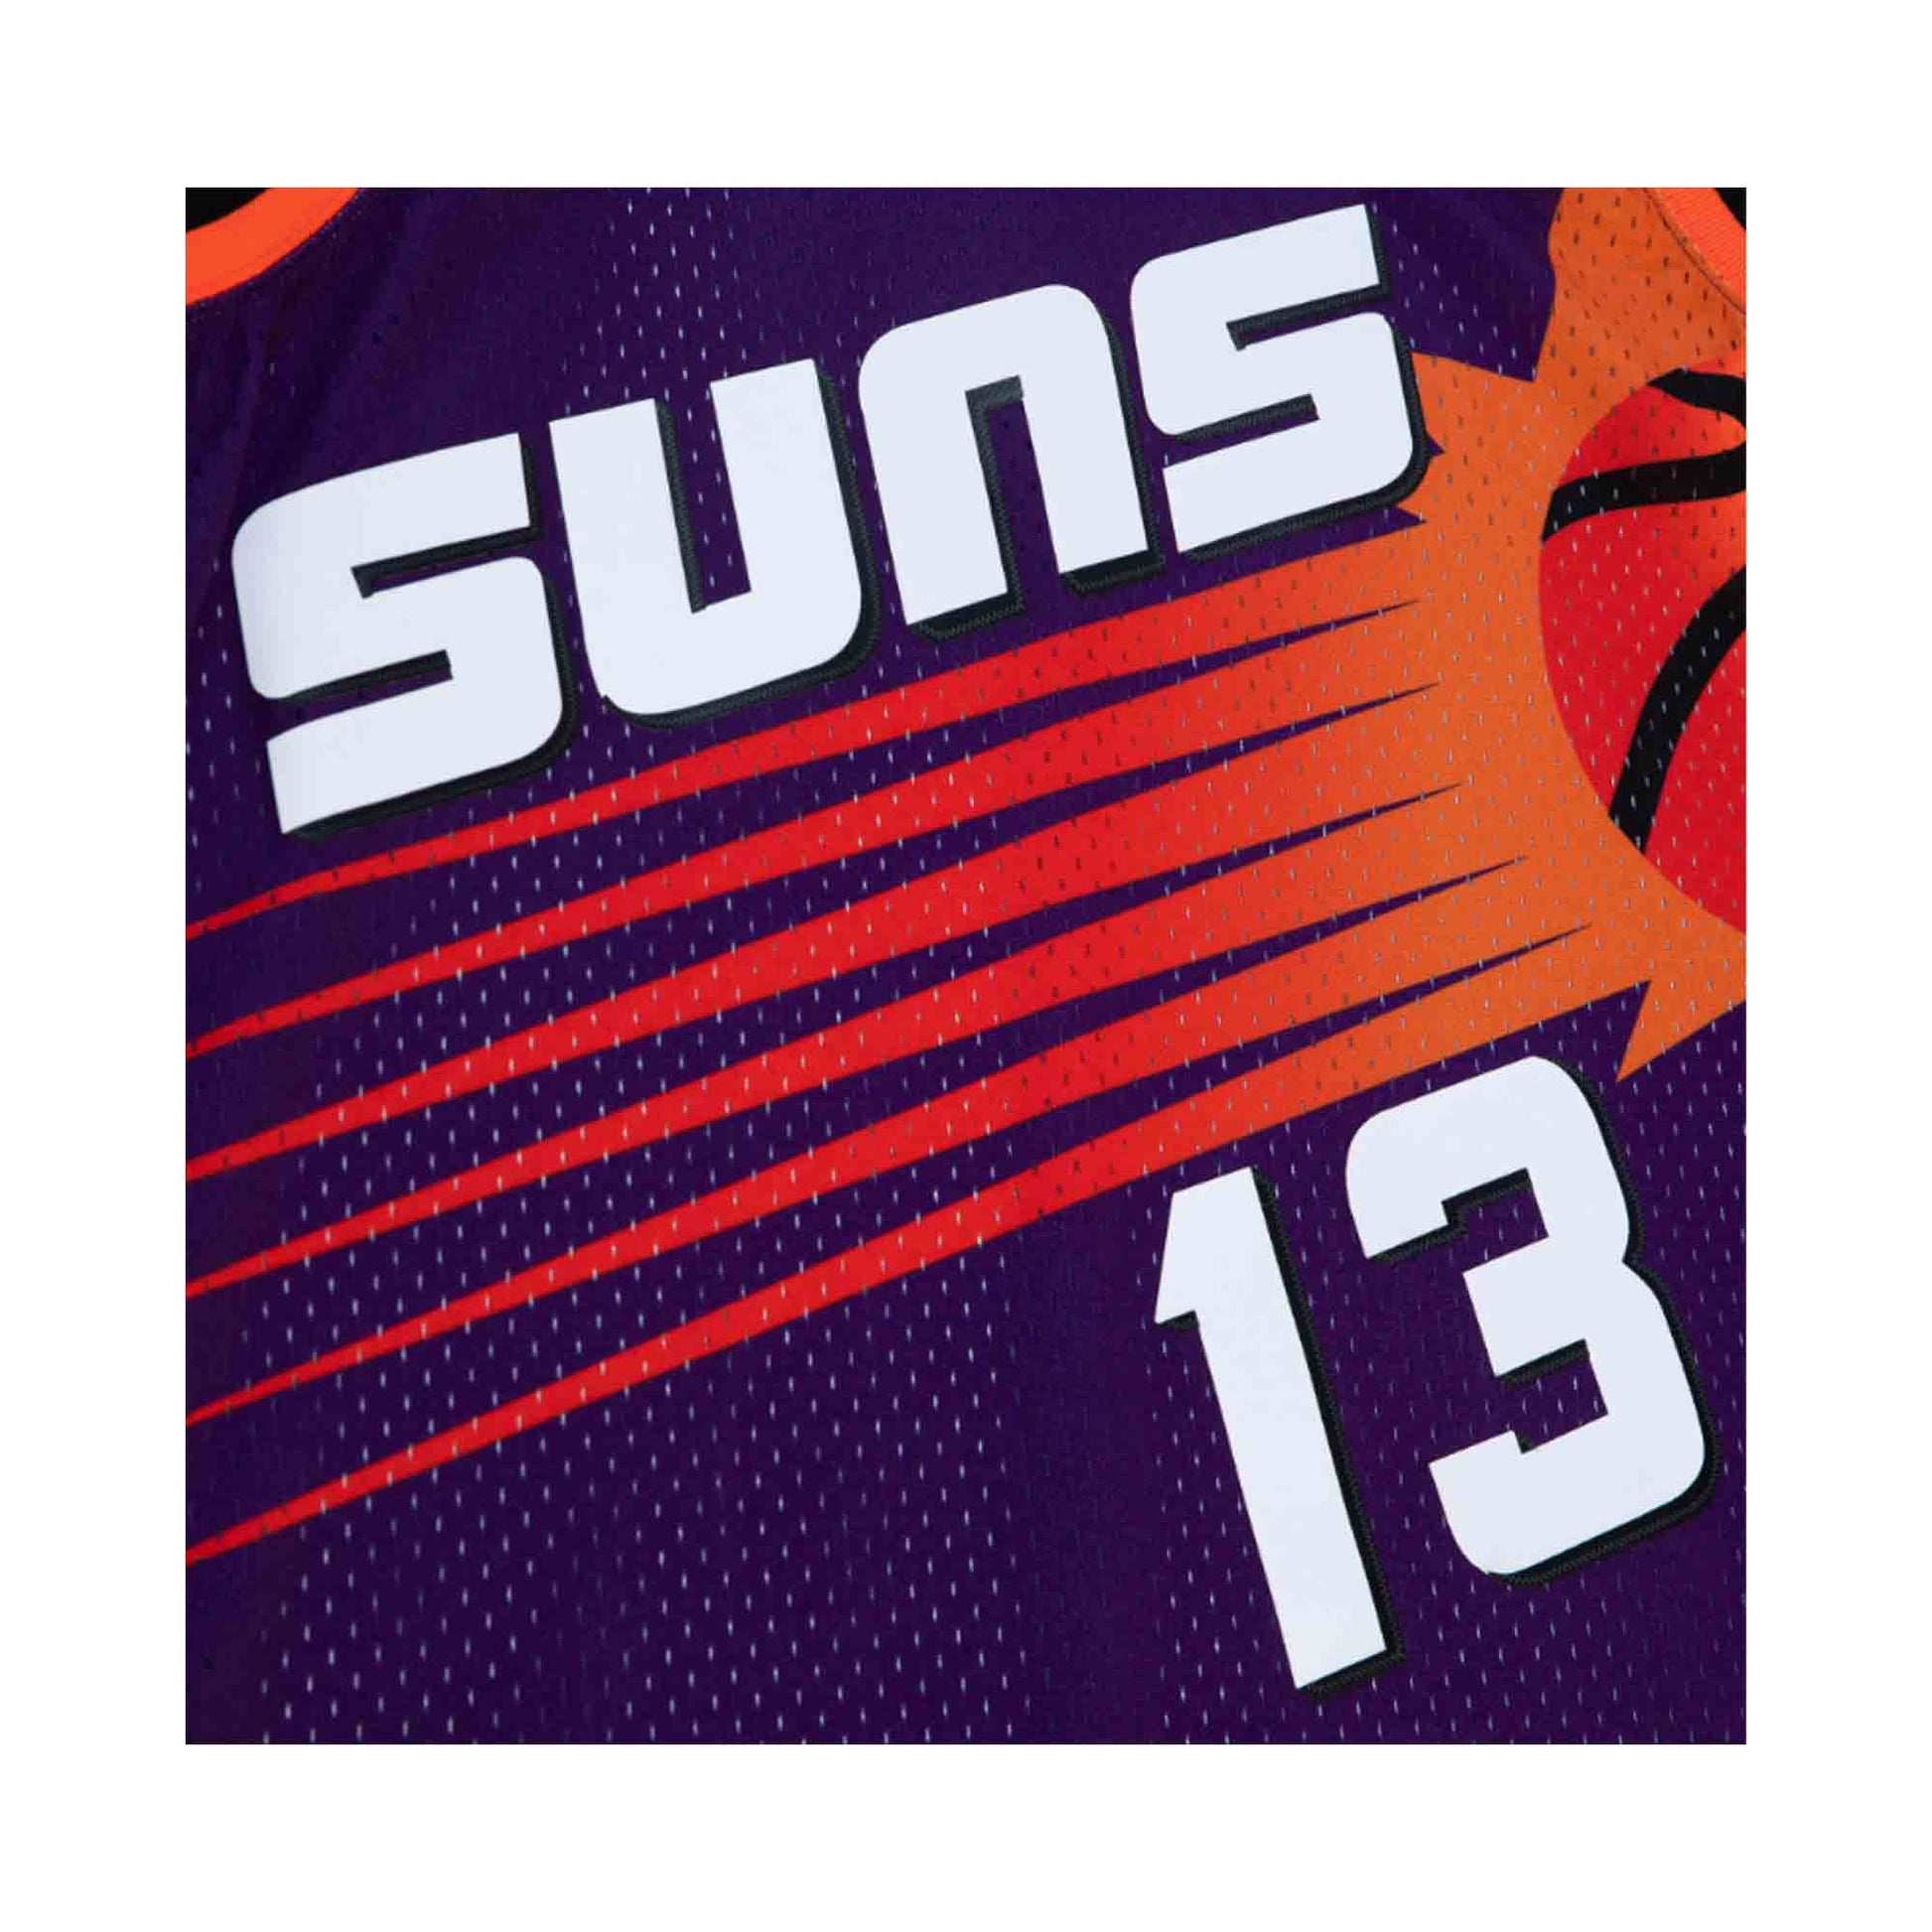 Mitchell &Ness Suns Jersey Number 13 Steve Nash